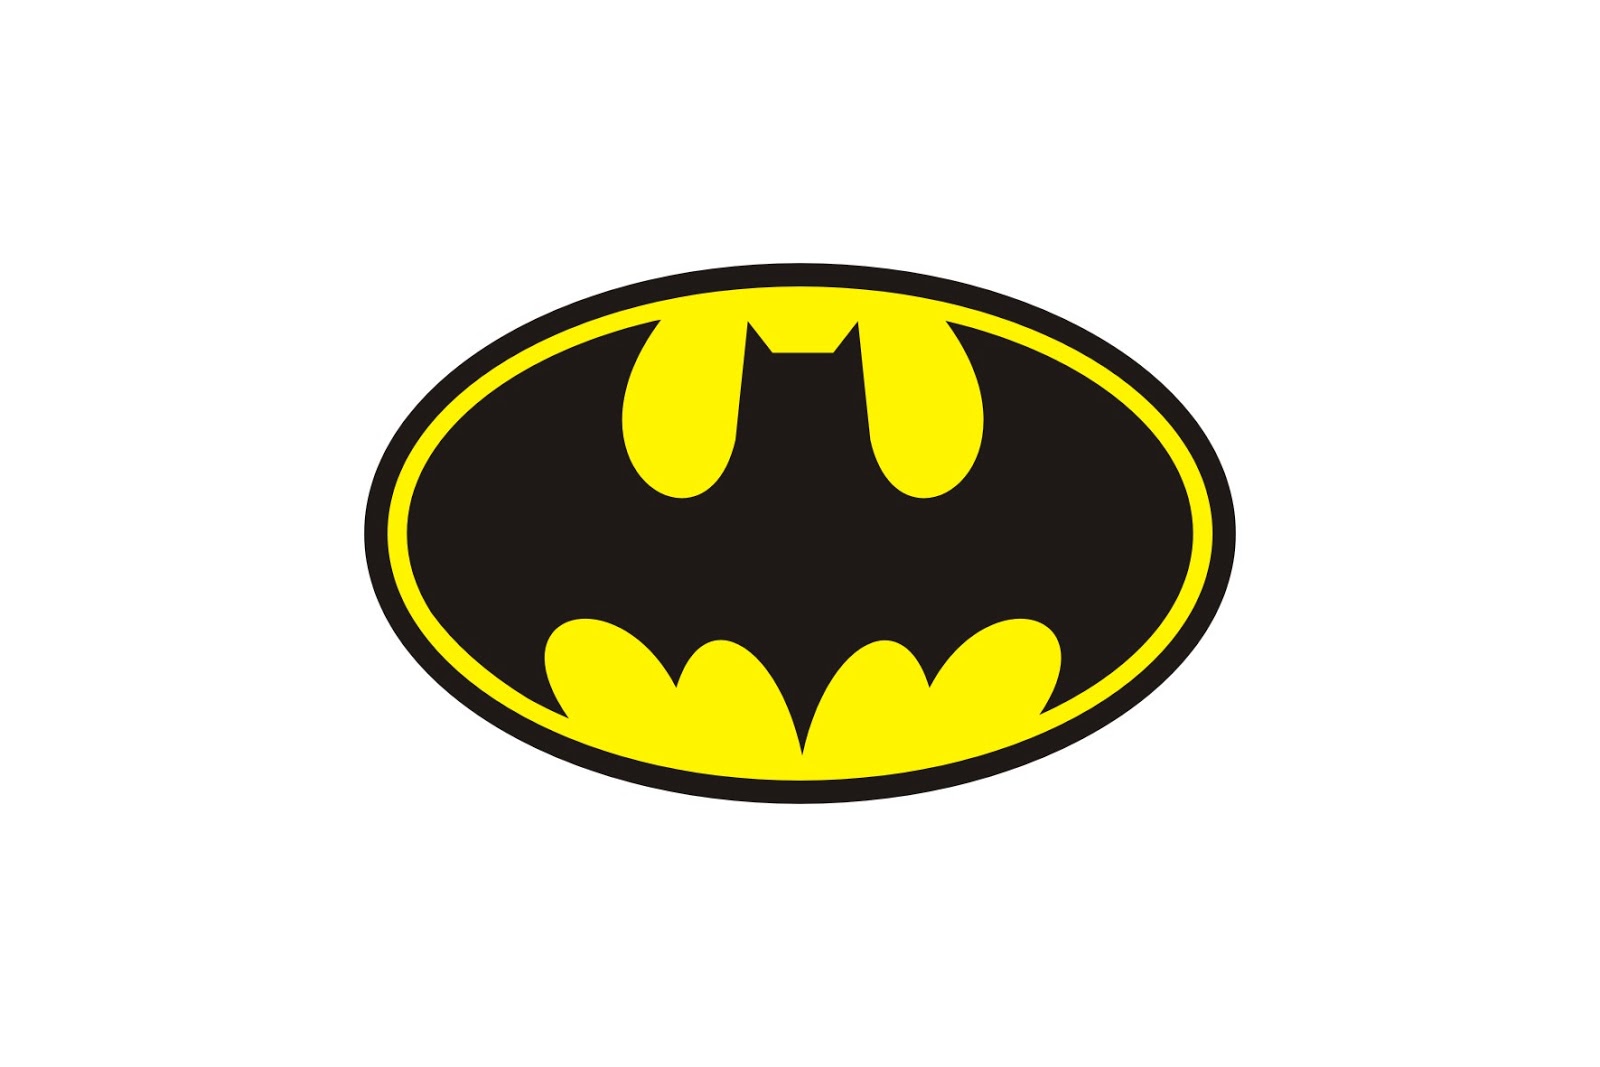 Batman Symbol Template - Clipart library